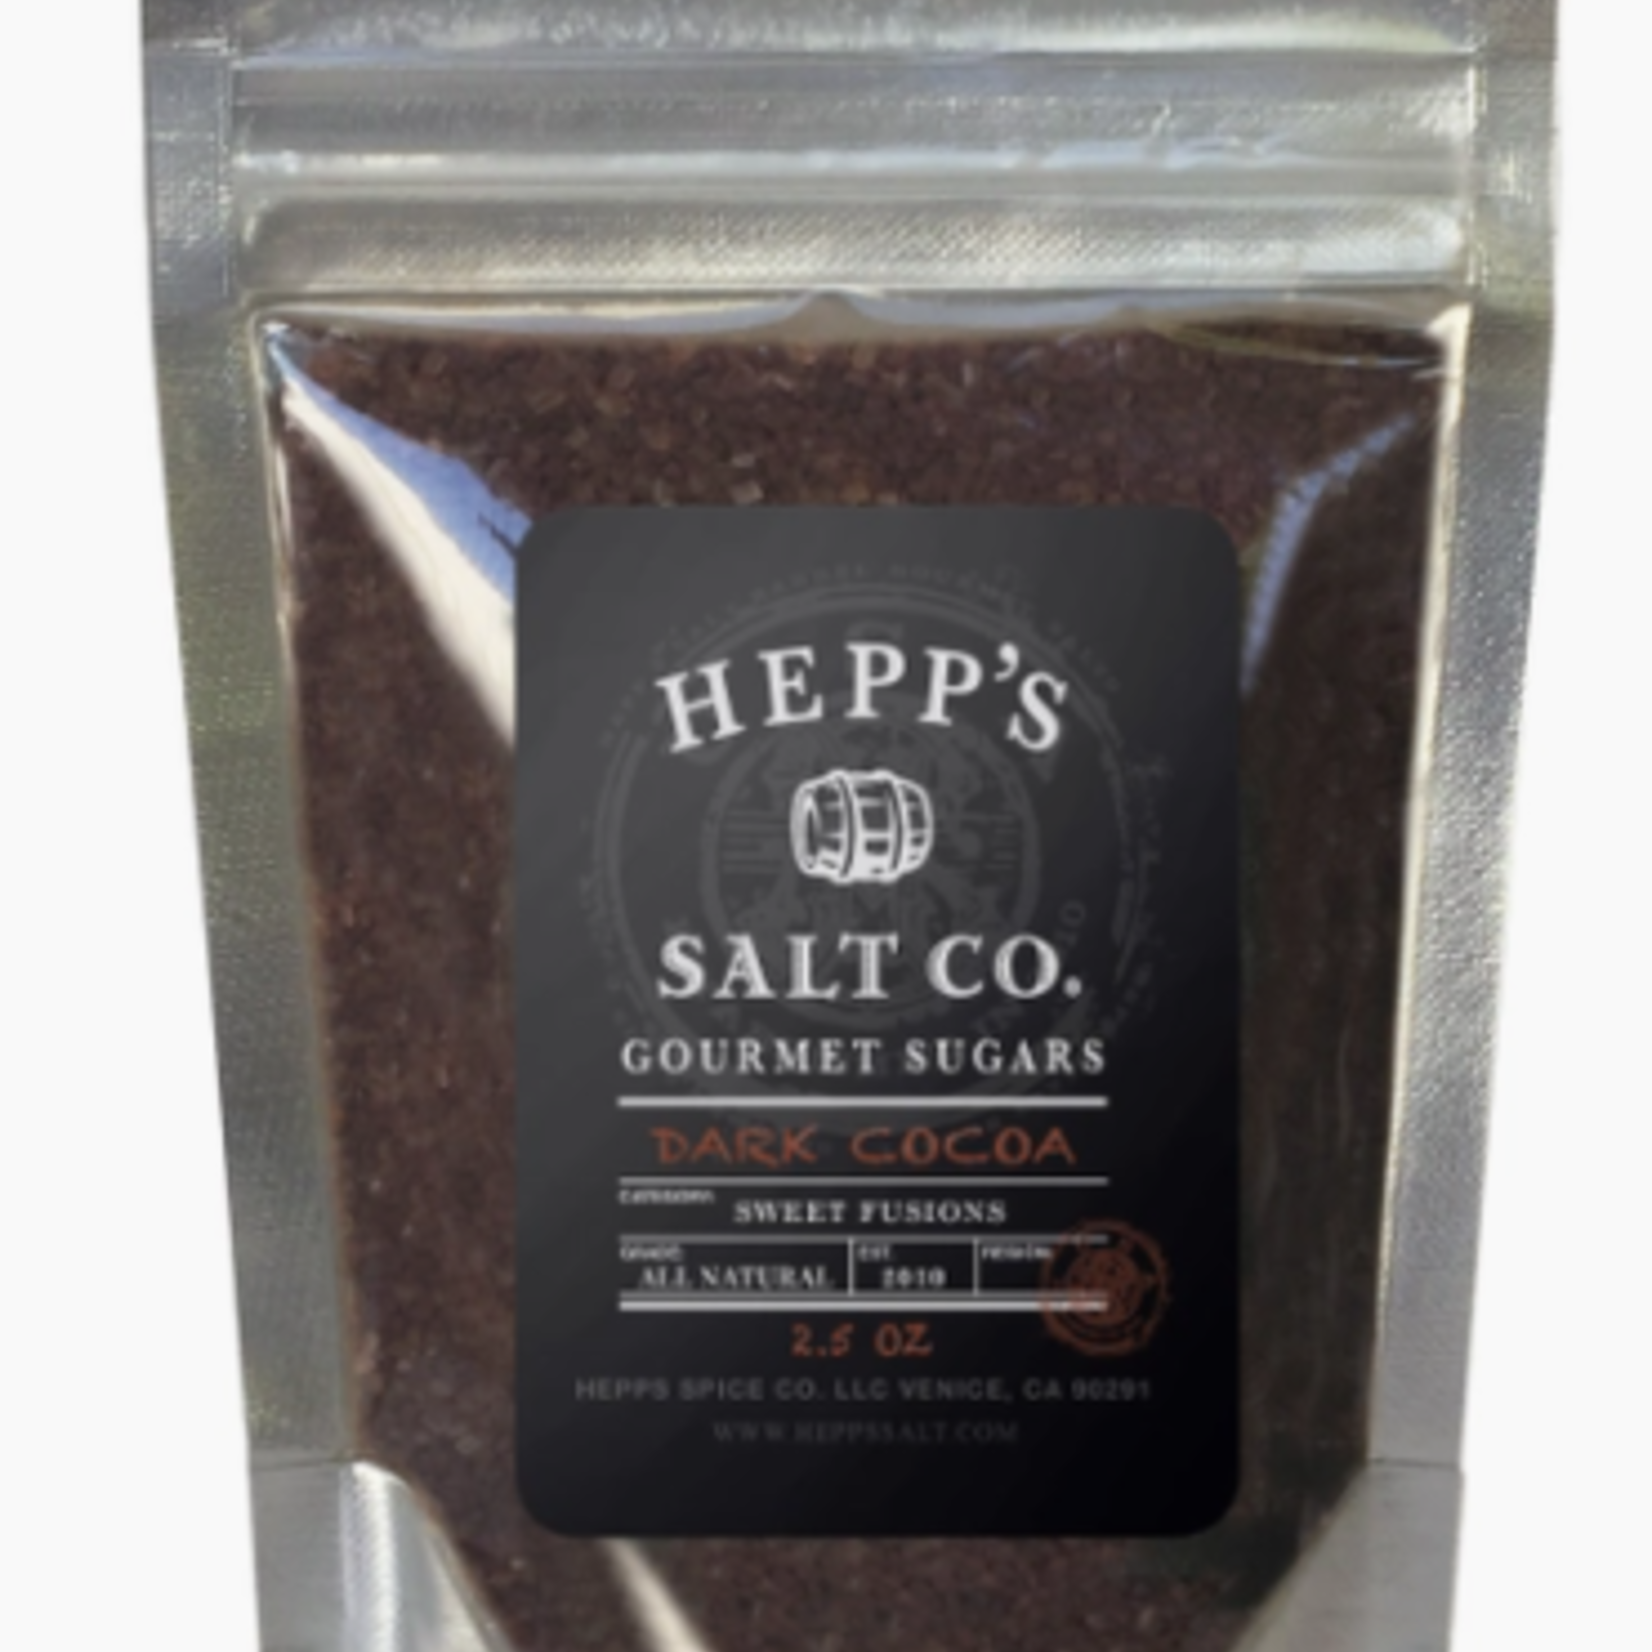 Hepp's Salt Co. Dark Cocoa Infused Cane Sugar